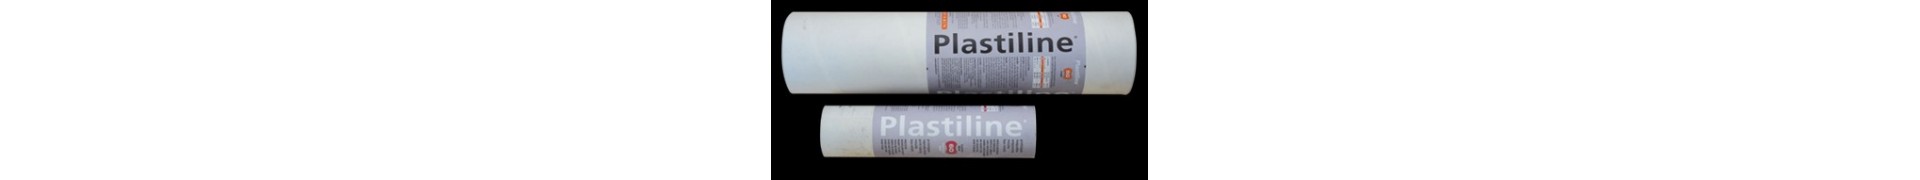 PLASTILINE HERBIN 55 1 Kg STANDARD PLASTILINE GRISE 